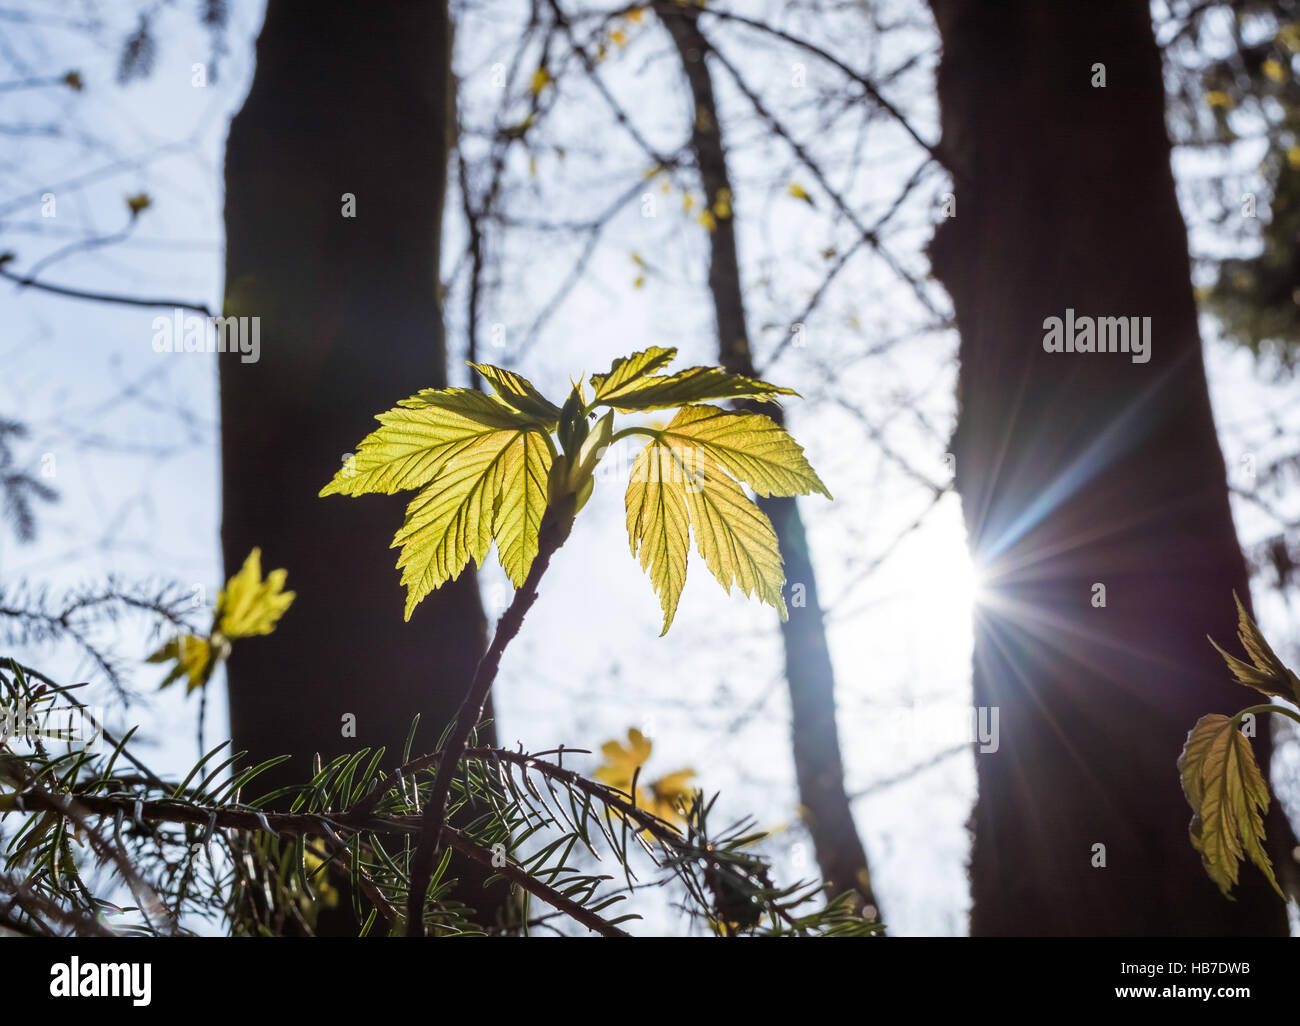 Leaves in sunlight Stock Photo